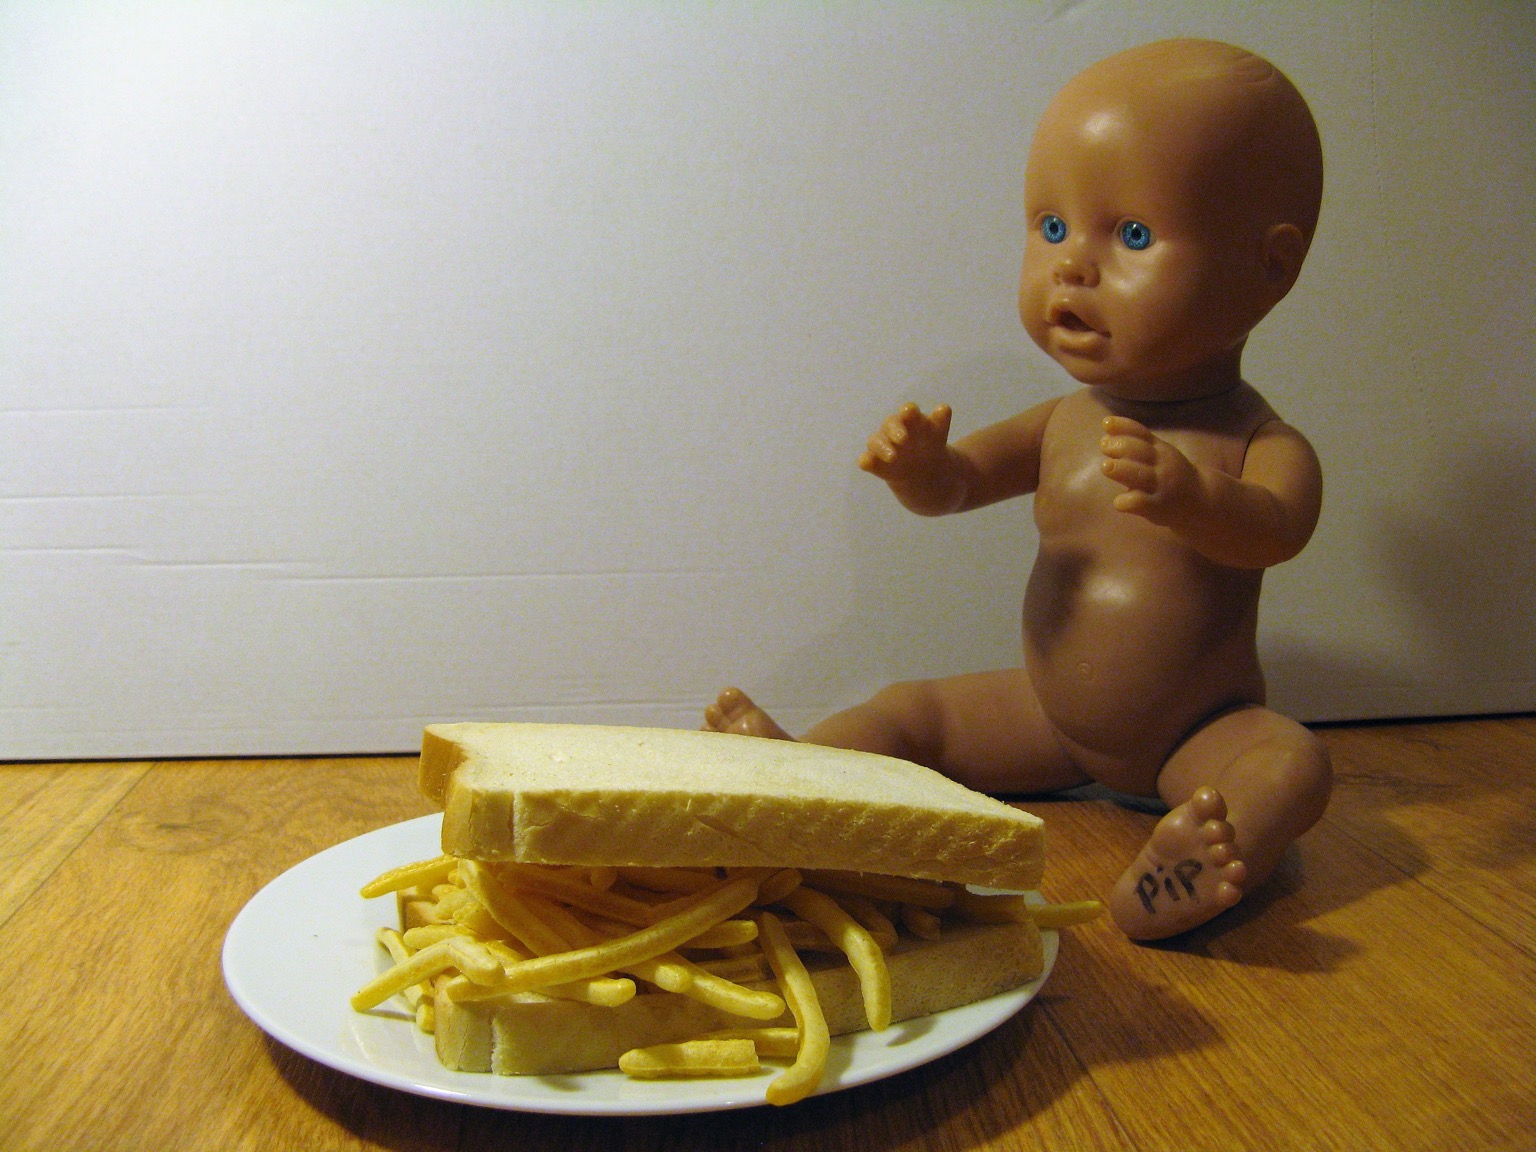 French Fries sandwich alongside a doll